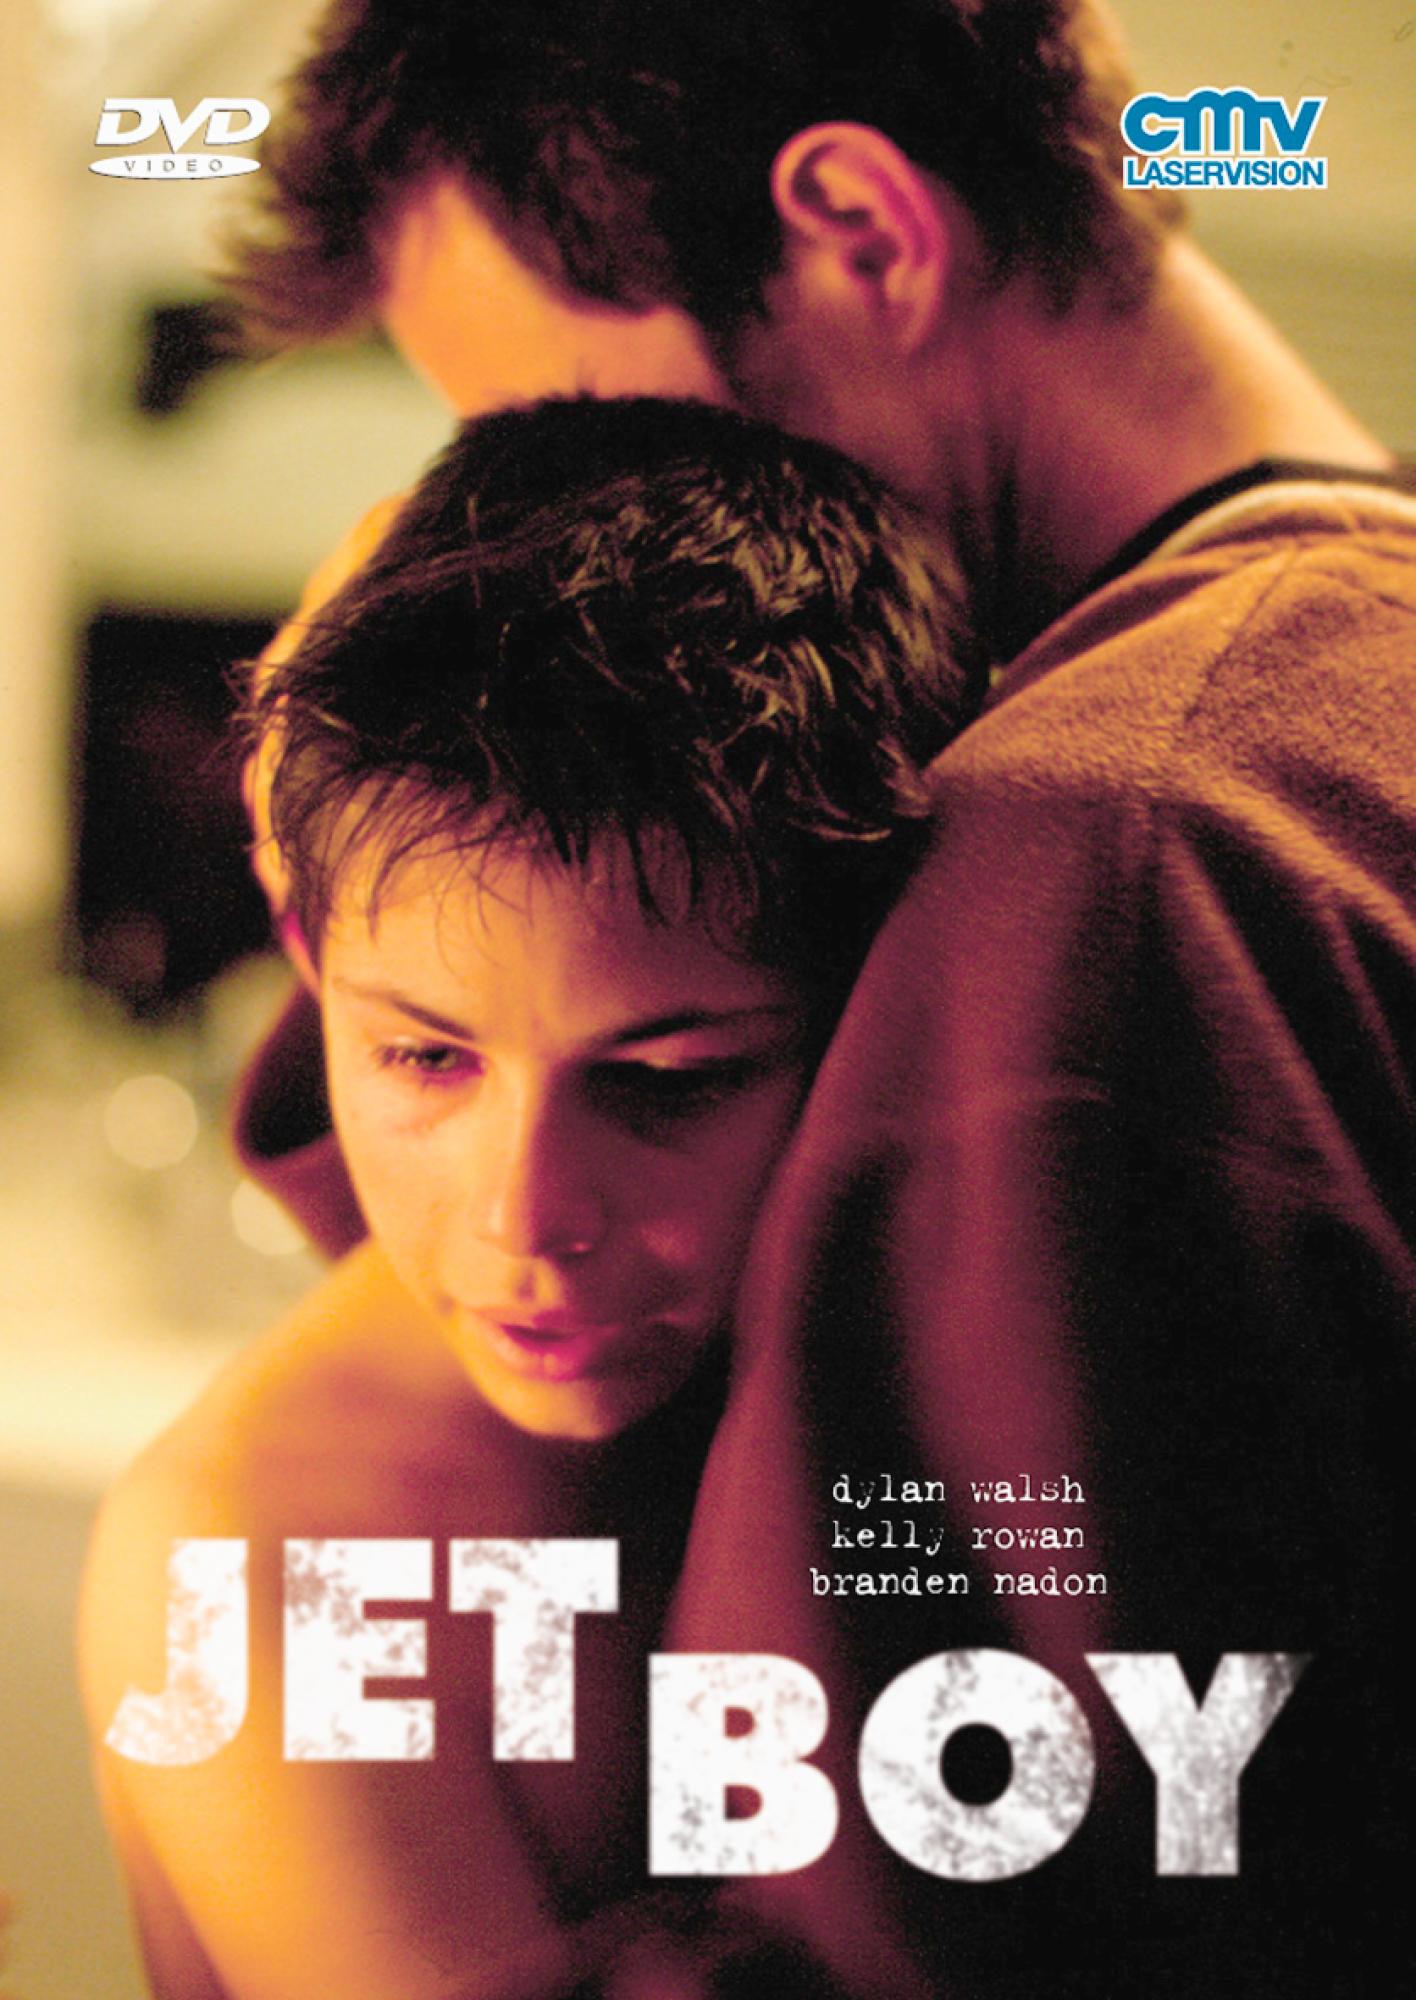 JET BOY DVD